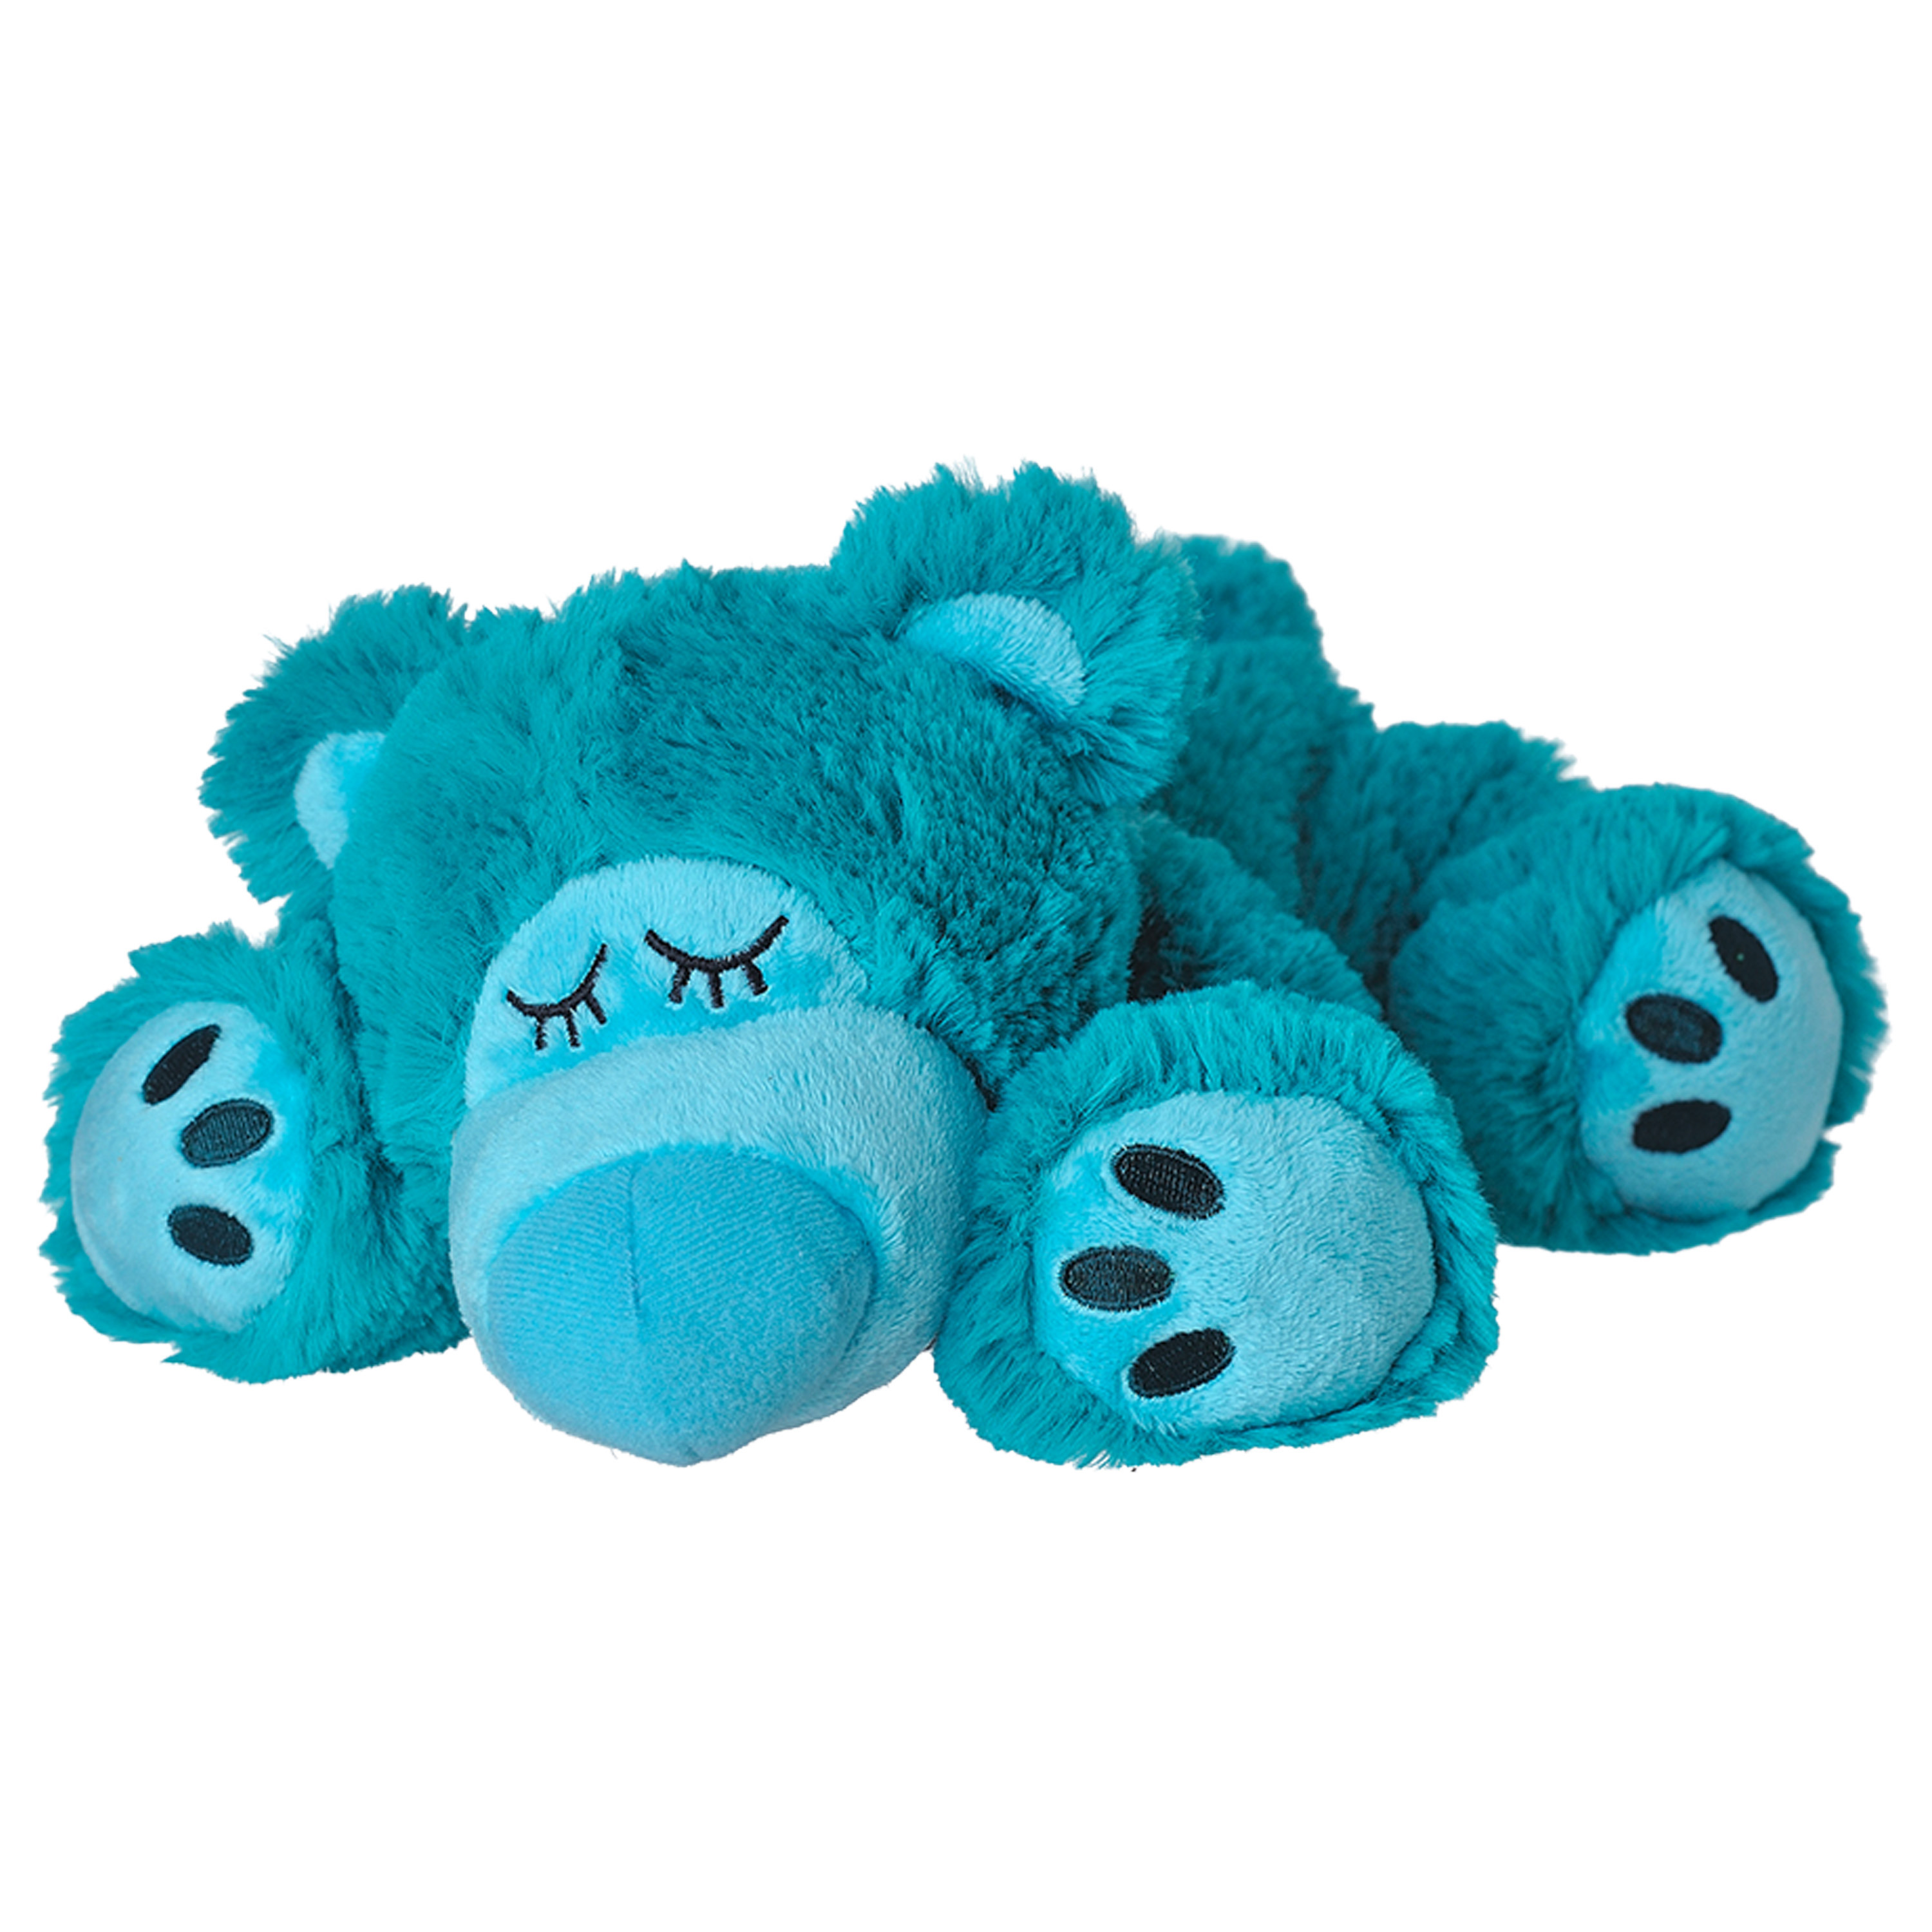 Warmte/magnetron opwarm knuffel - Teddybeer - turquoise - 32 cm - pittenzak